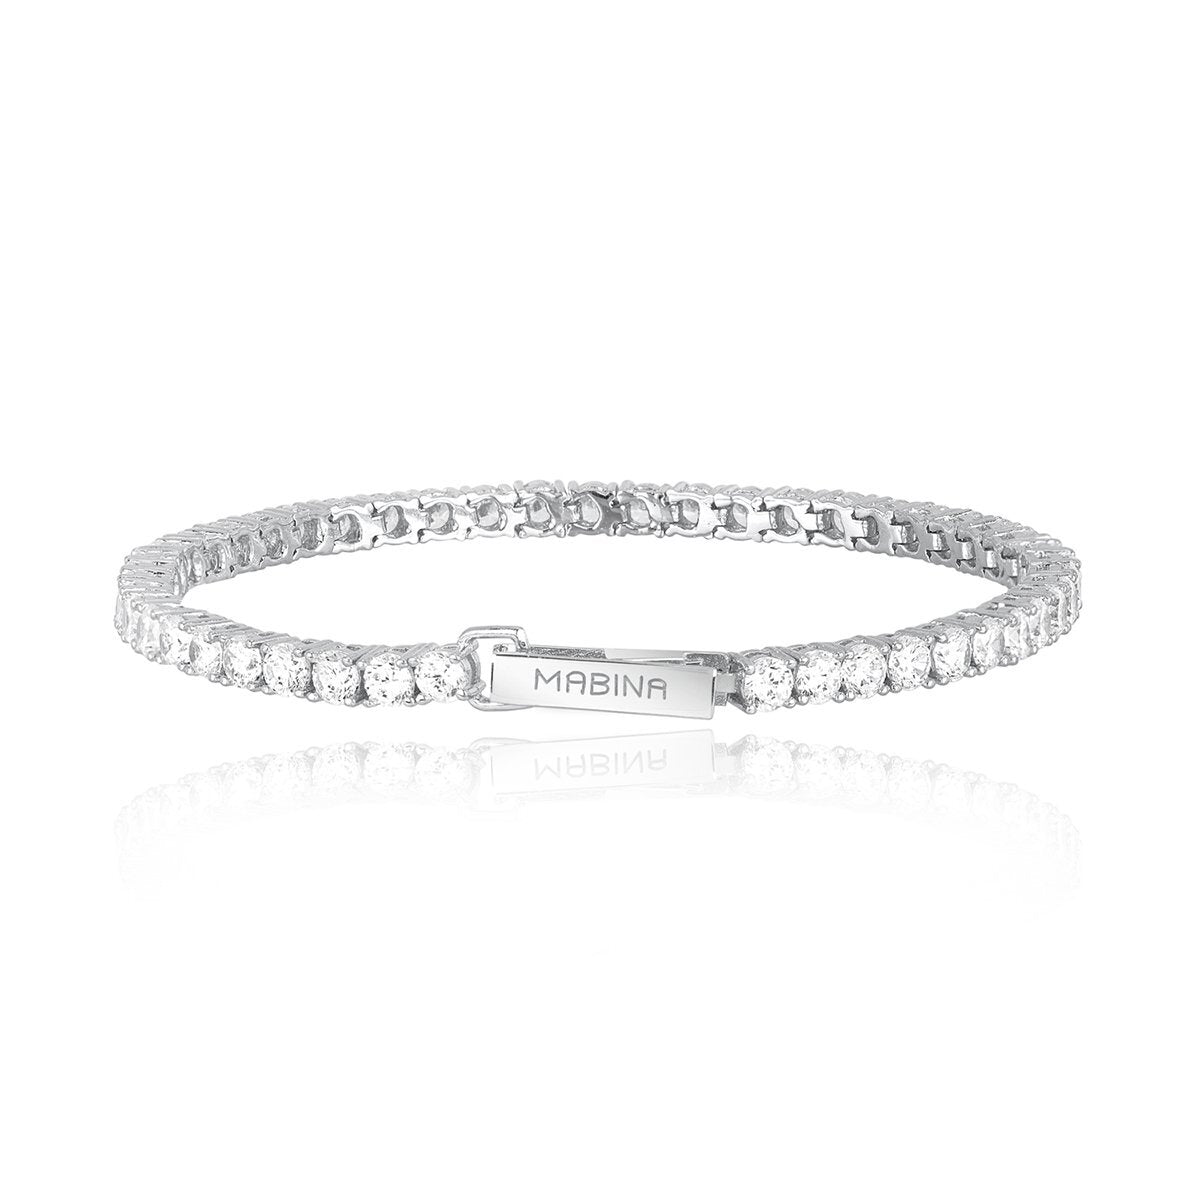 Mabina tennis bracelet Silver 533020/M